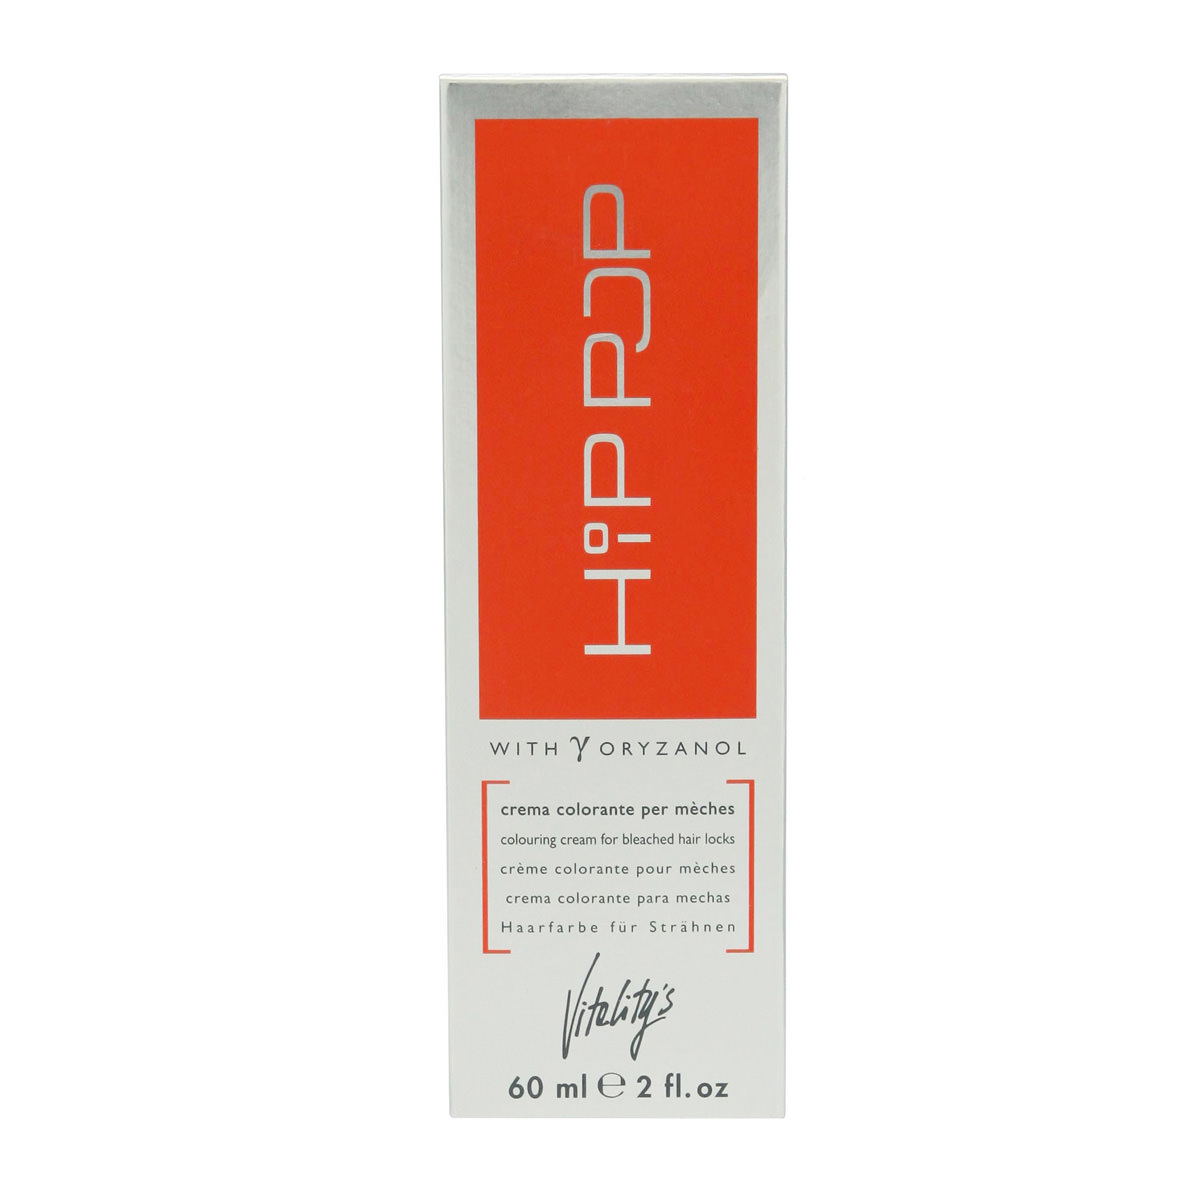 Vitality’s-Hip-Pop-Colouring-Cream-for-Bleached-Hair-Locks-(60-ml)-high-sfw(2)